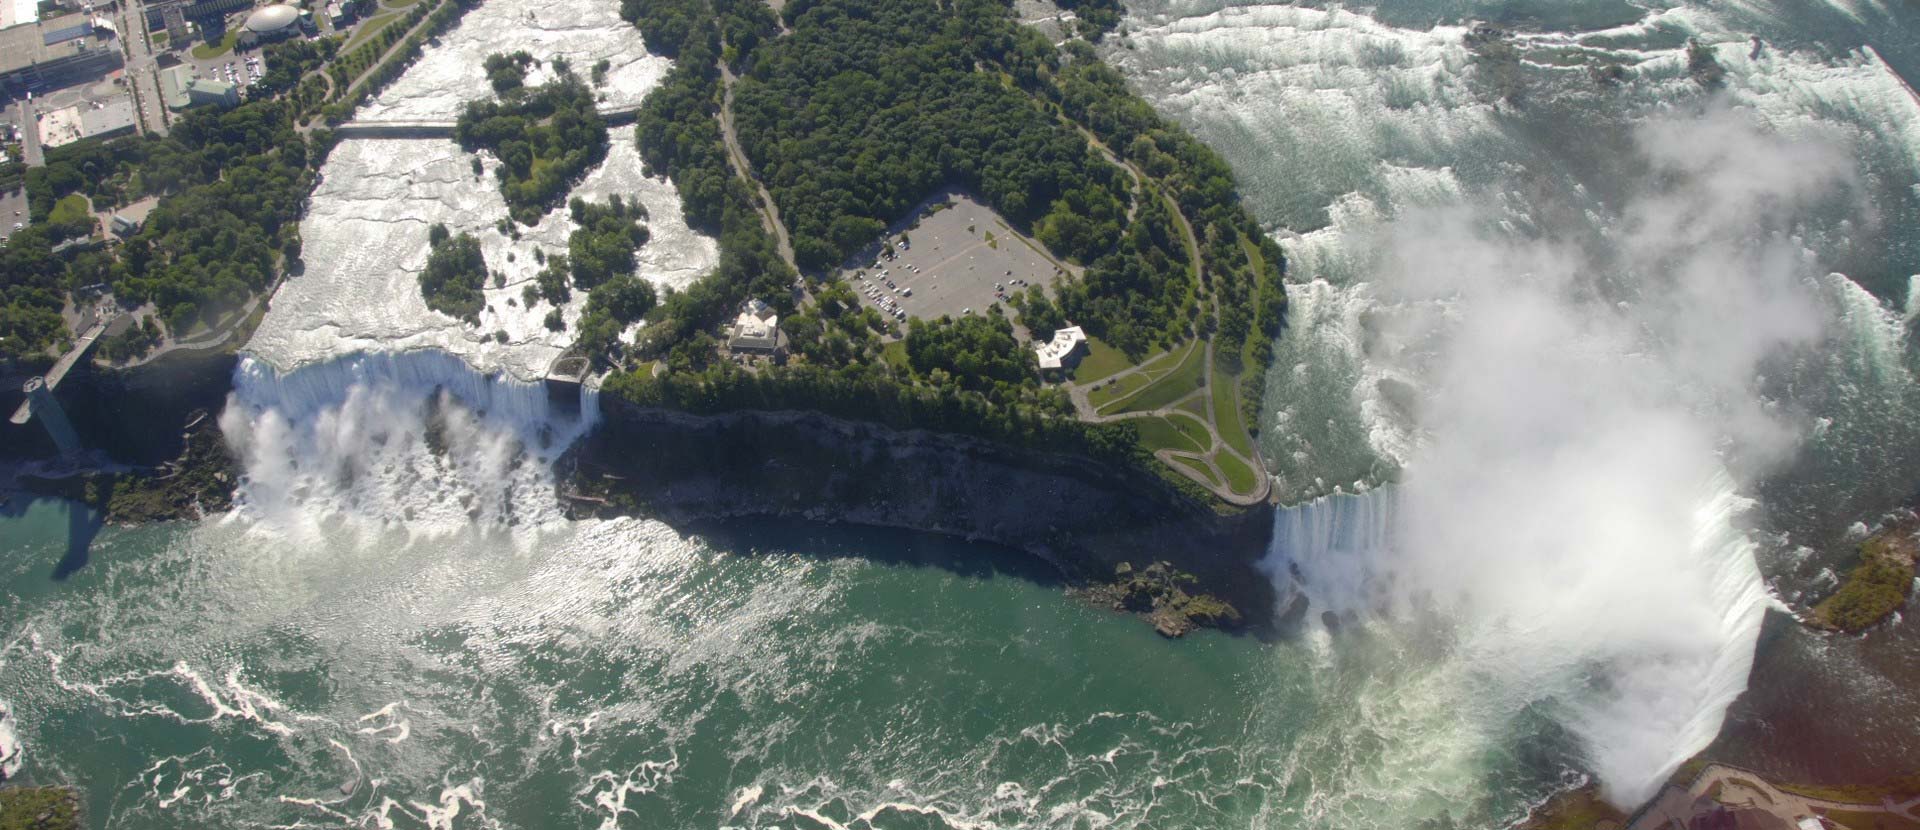 Niagara falls, a majestic wonder!